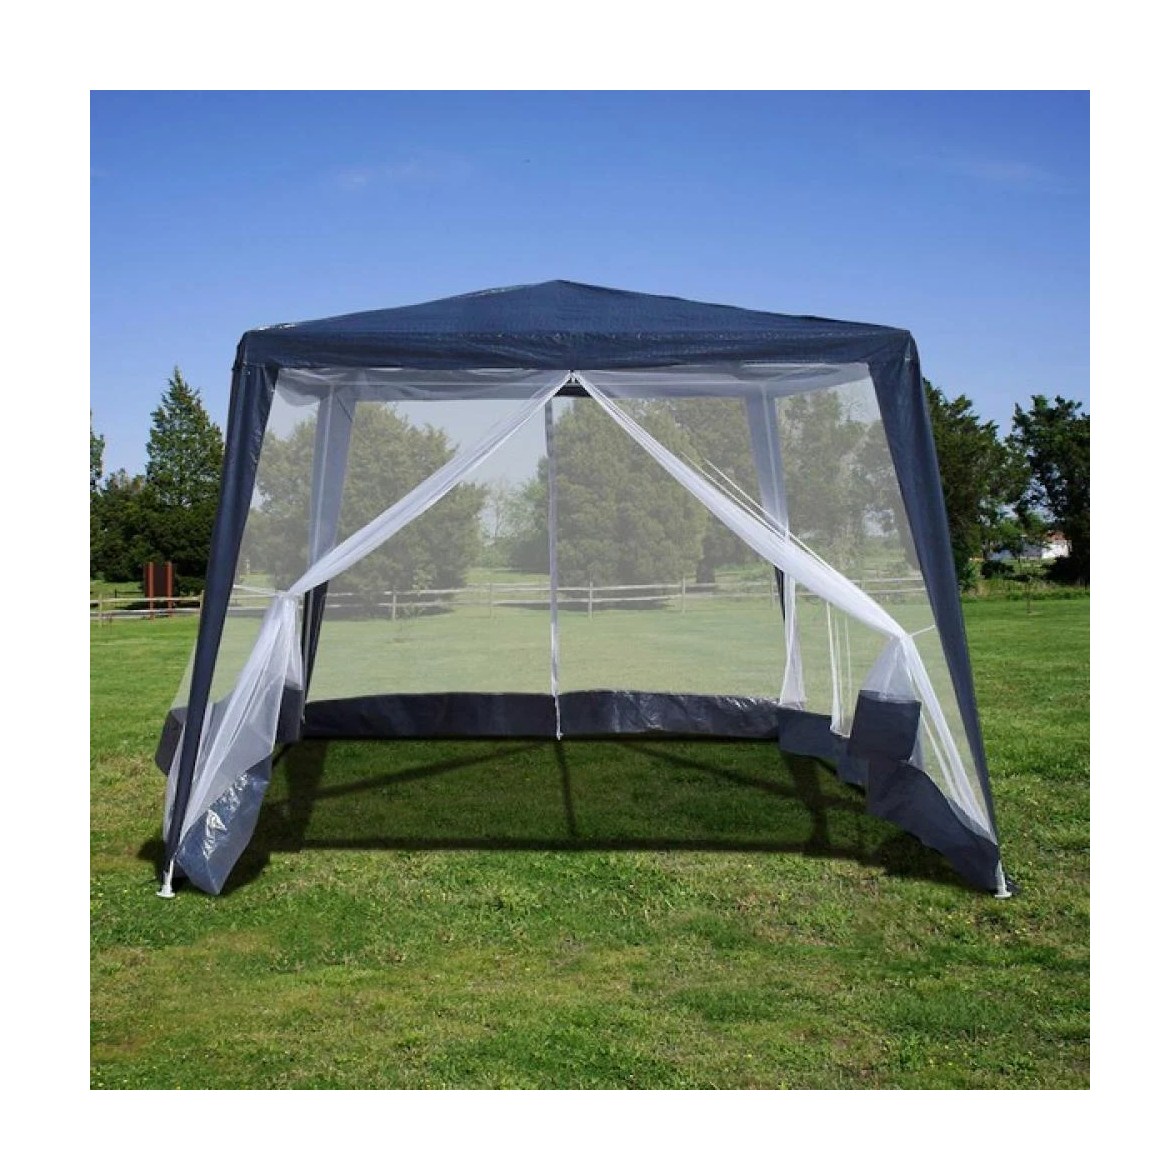 Тент сетка купить. Садовый шатер с сеткой AFM-1061na Green (2х3). Садовый шатер AFM-1035na Green (3x3/2.4x2.4). Шатер садовый Naterial антрацит Нью 4x4х2.75 м сталь серый. Шатер Tramp Mosquito Lux v2.